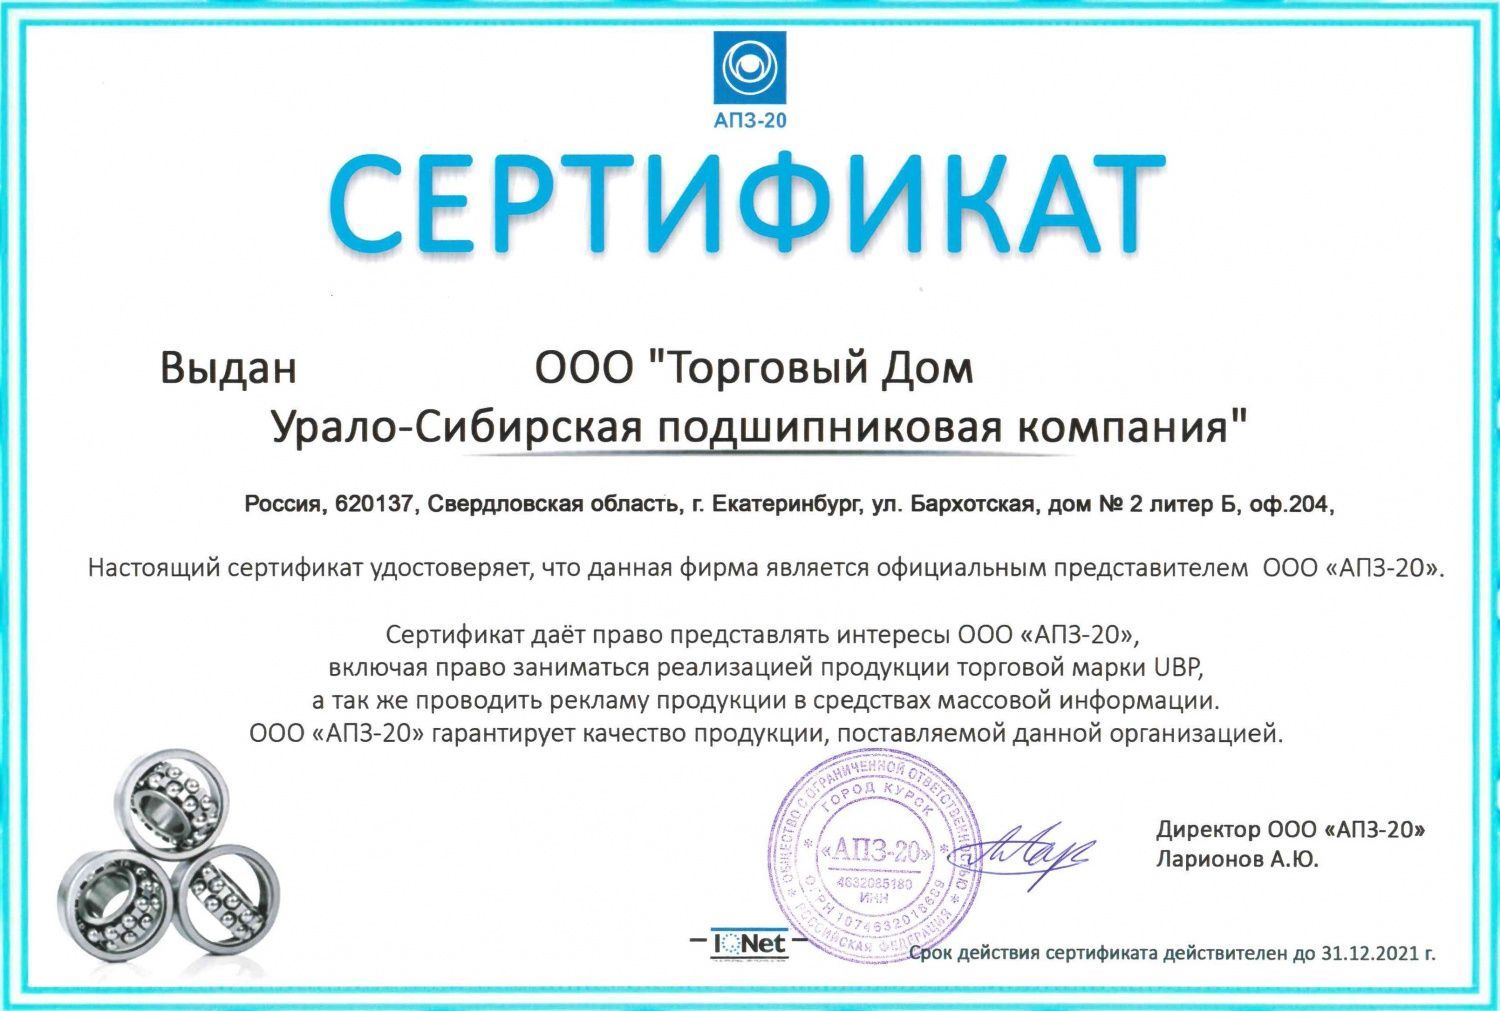 Дилерский сертификат АПЗ-20